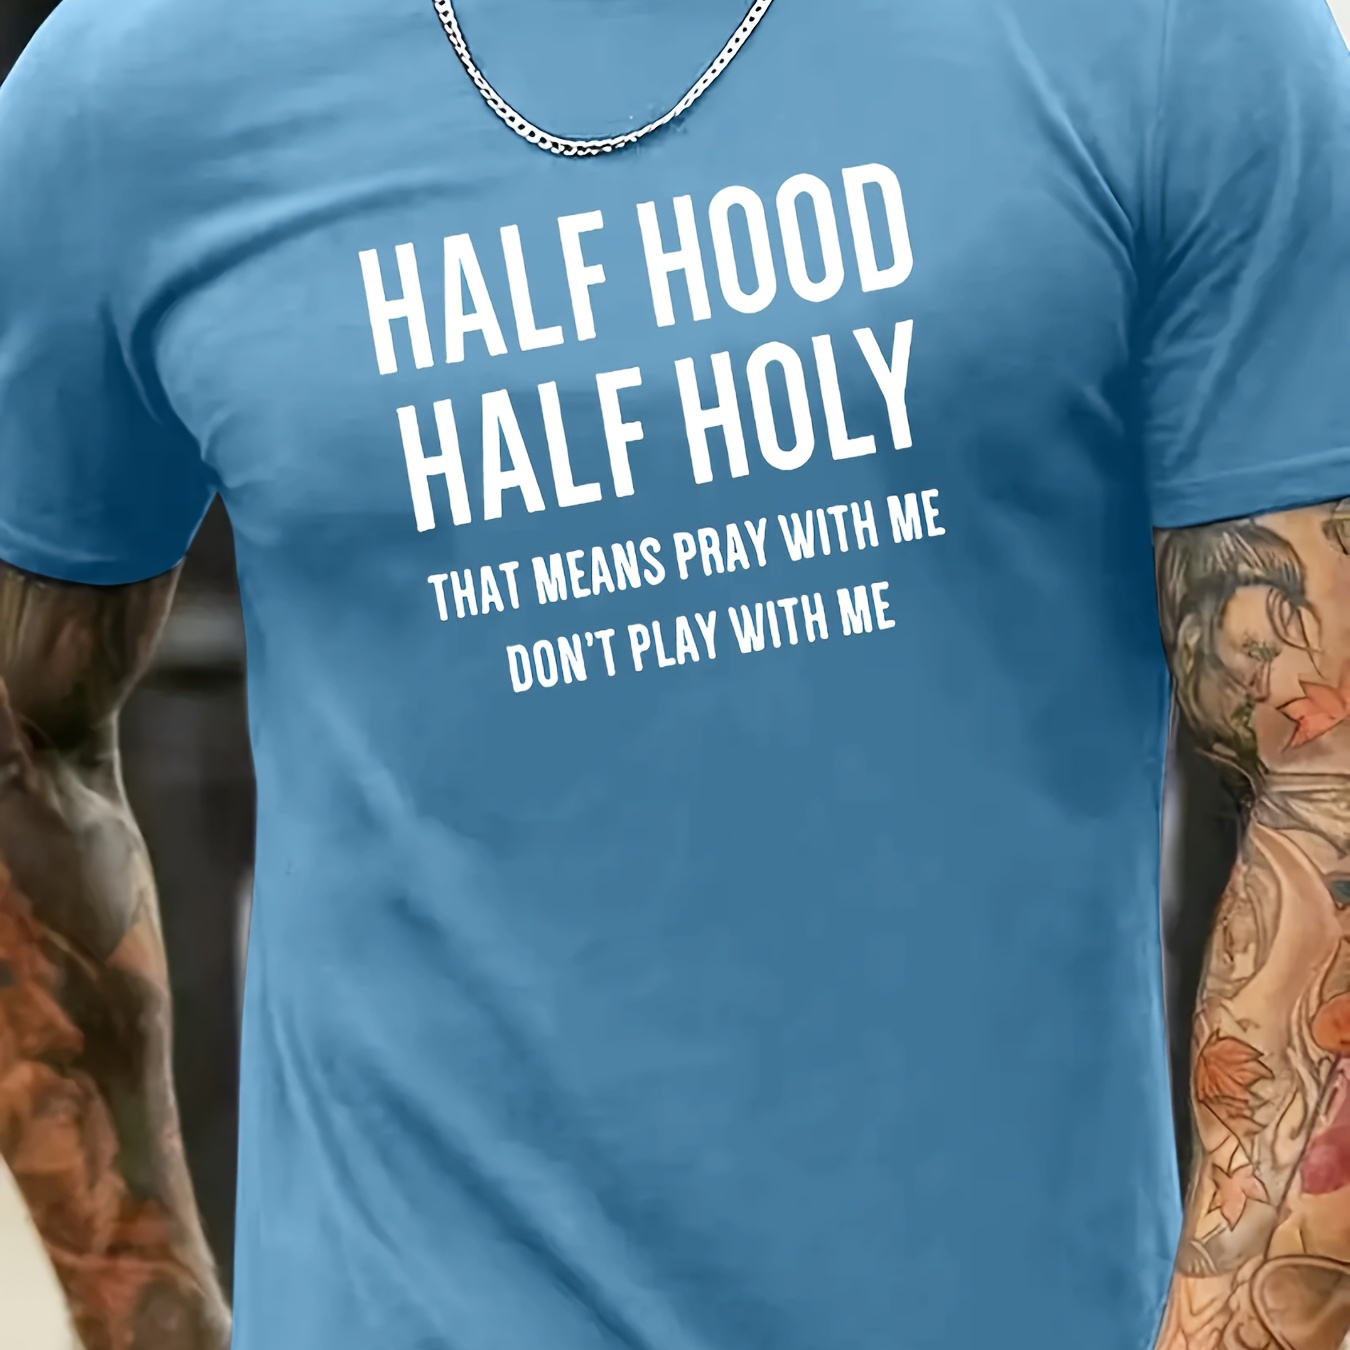 

Half Hood Half Holy Print T Shirt, Tees For Men, Casual Short Sleeve T-shirt For Summer